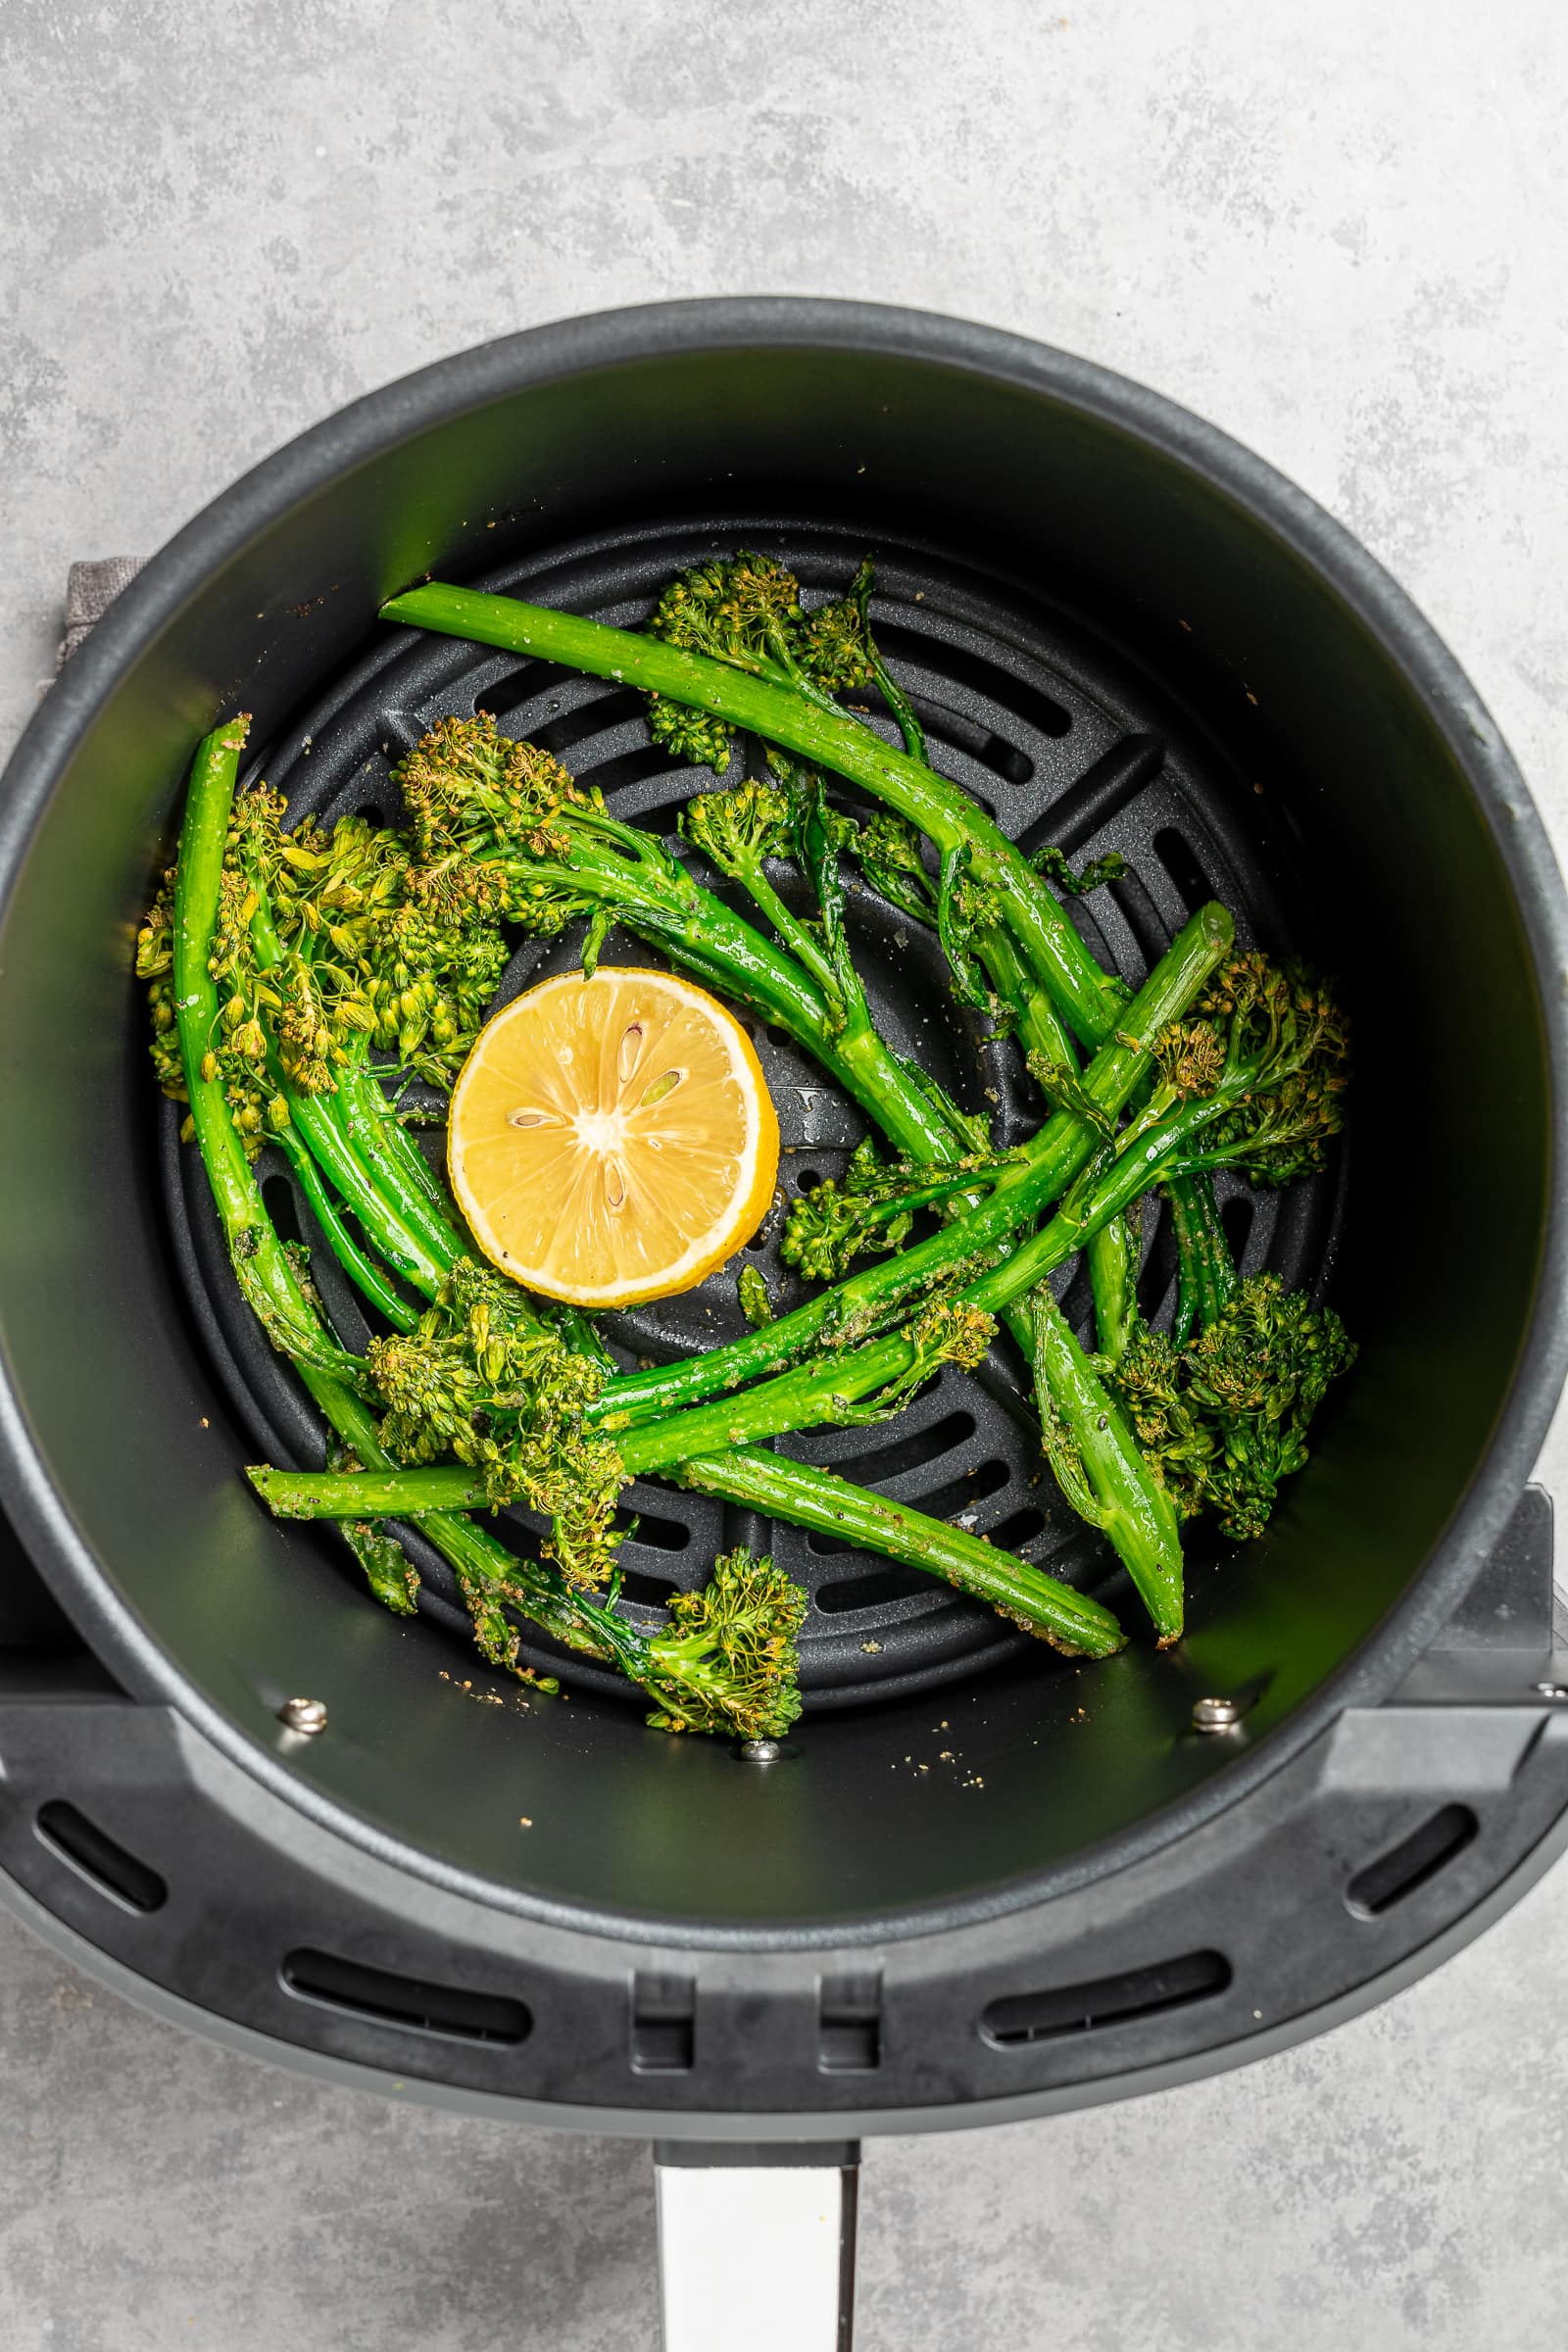 Crispy, air fried broccolini in an air fryer basket.